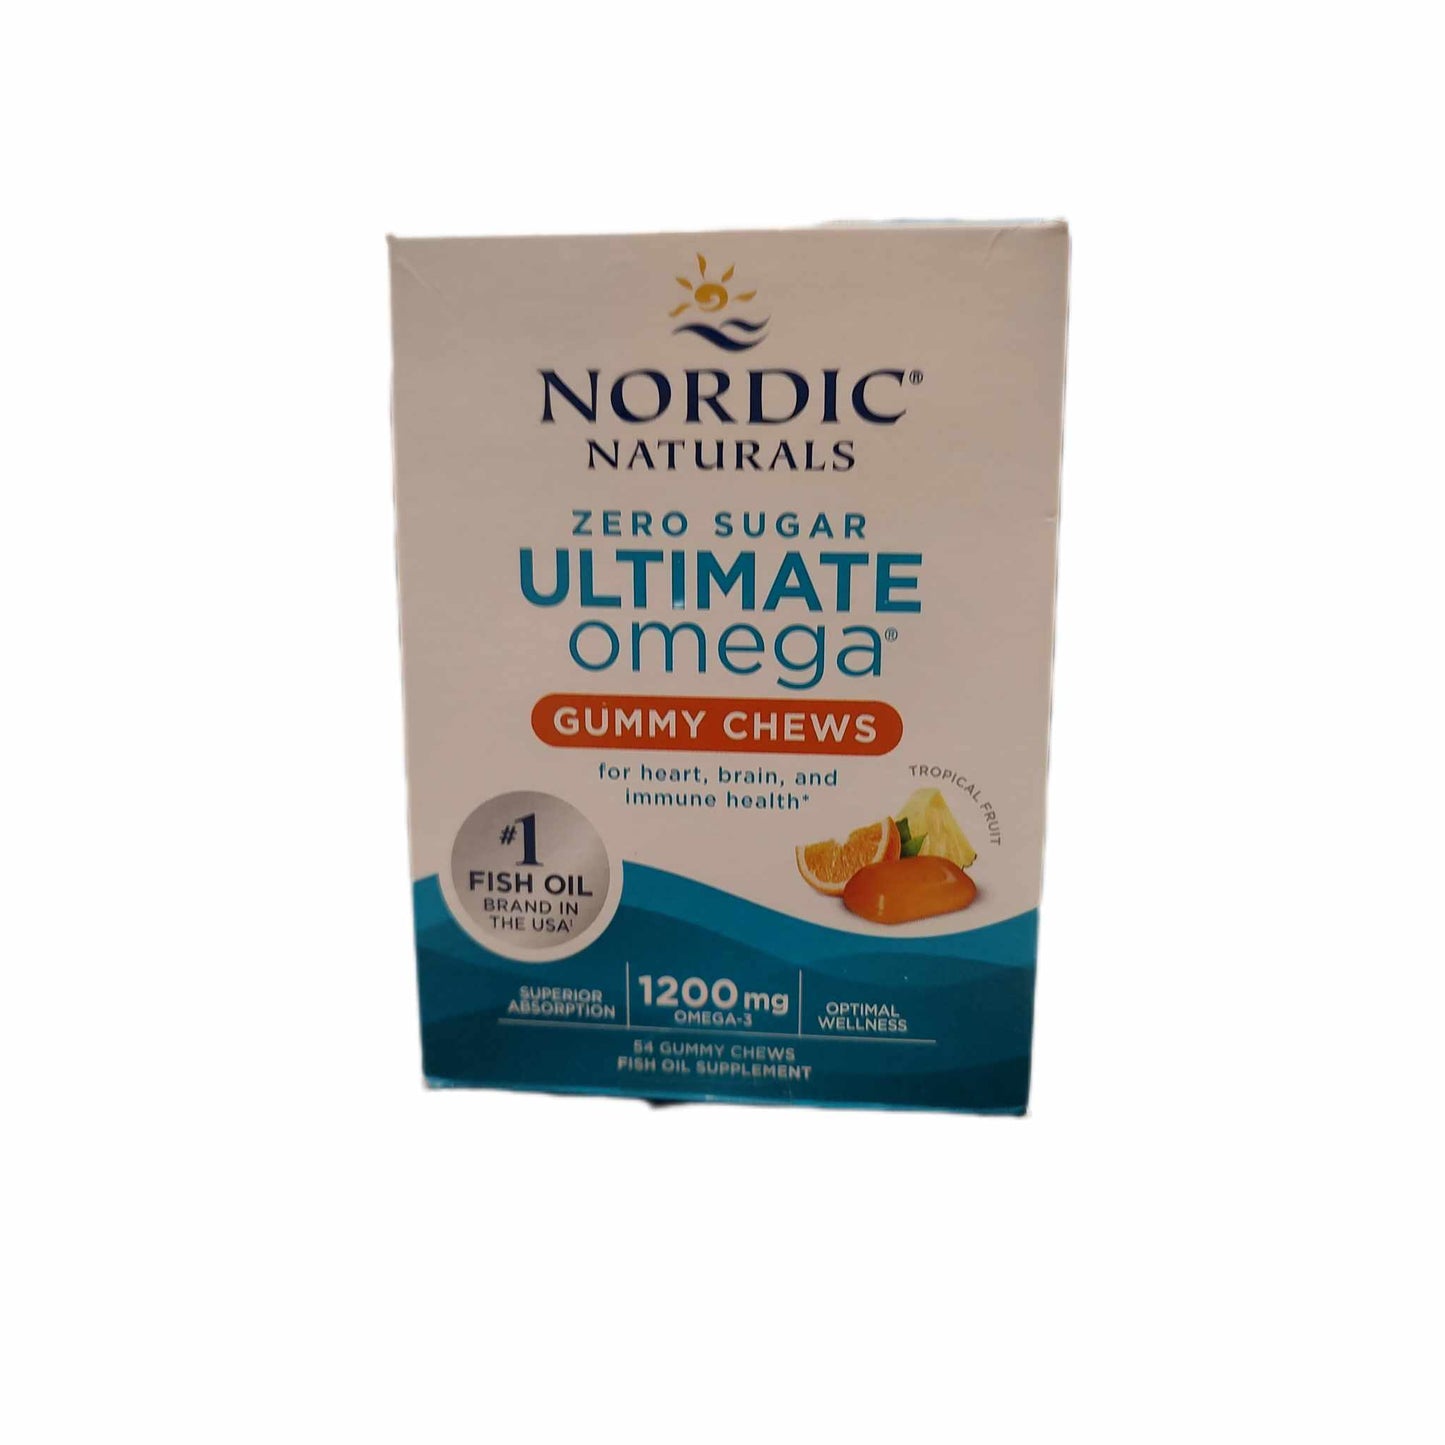 Nordic Naturals Ultimate Omega Gummy Chews